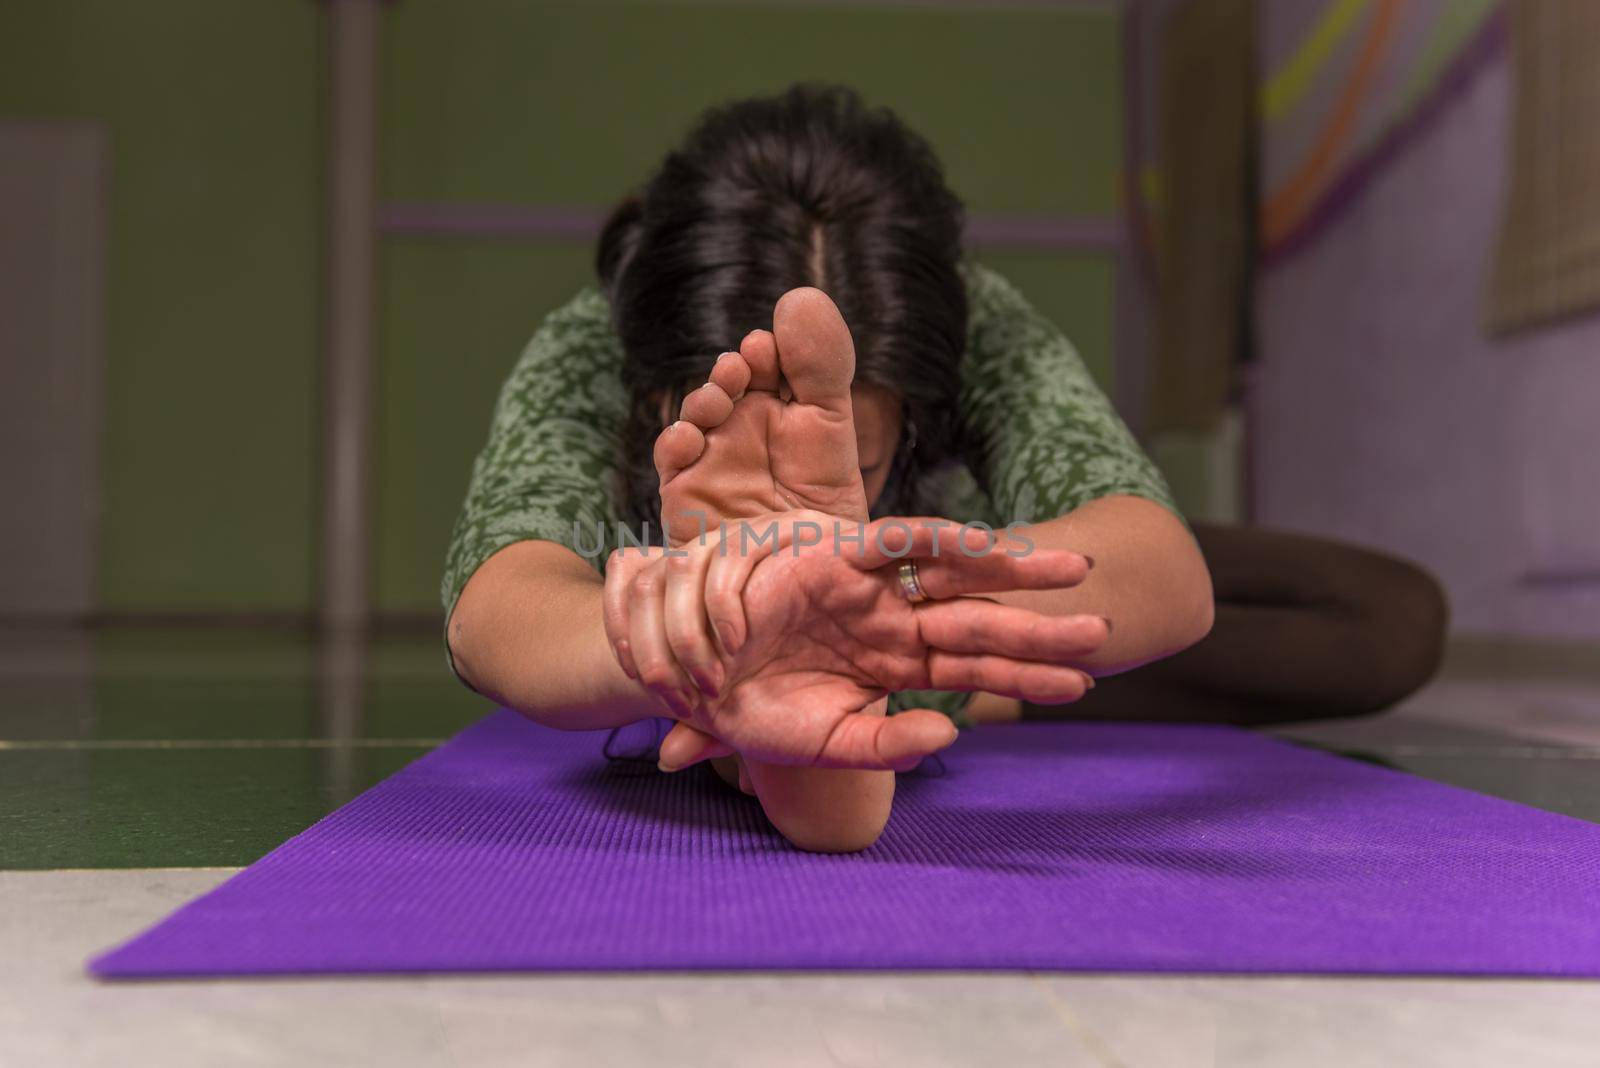 Yogi poses in the gym./Yoga master performing yoga poses .